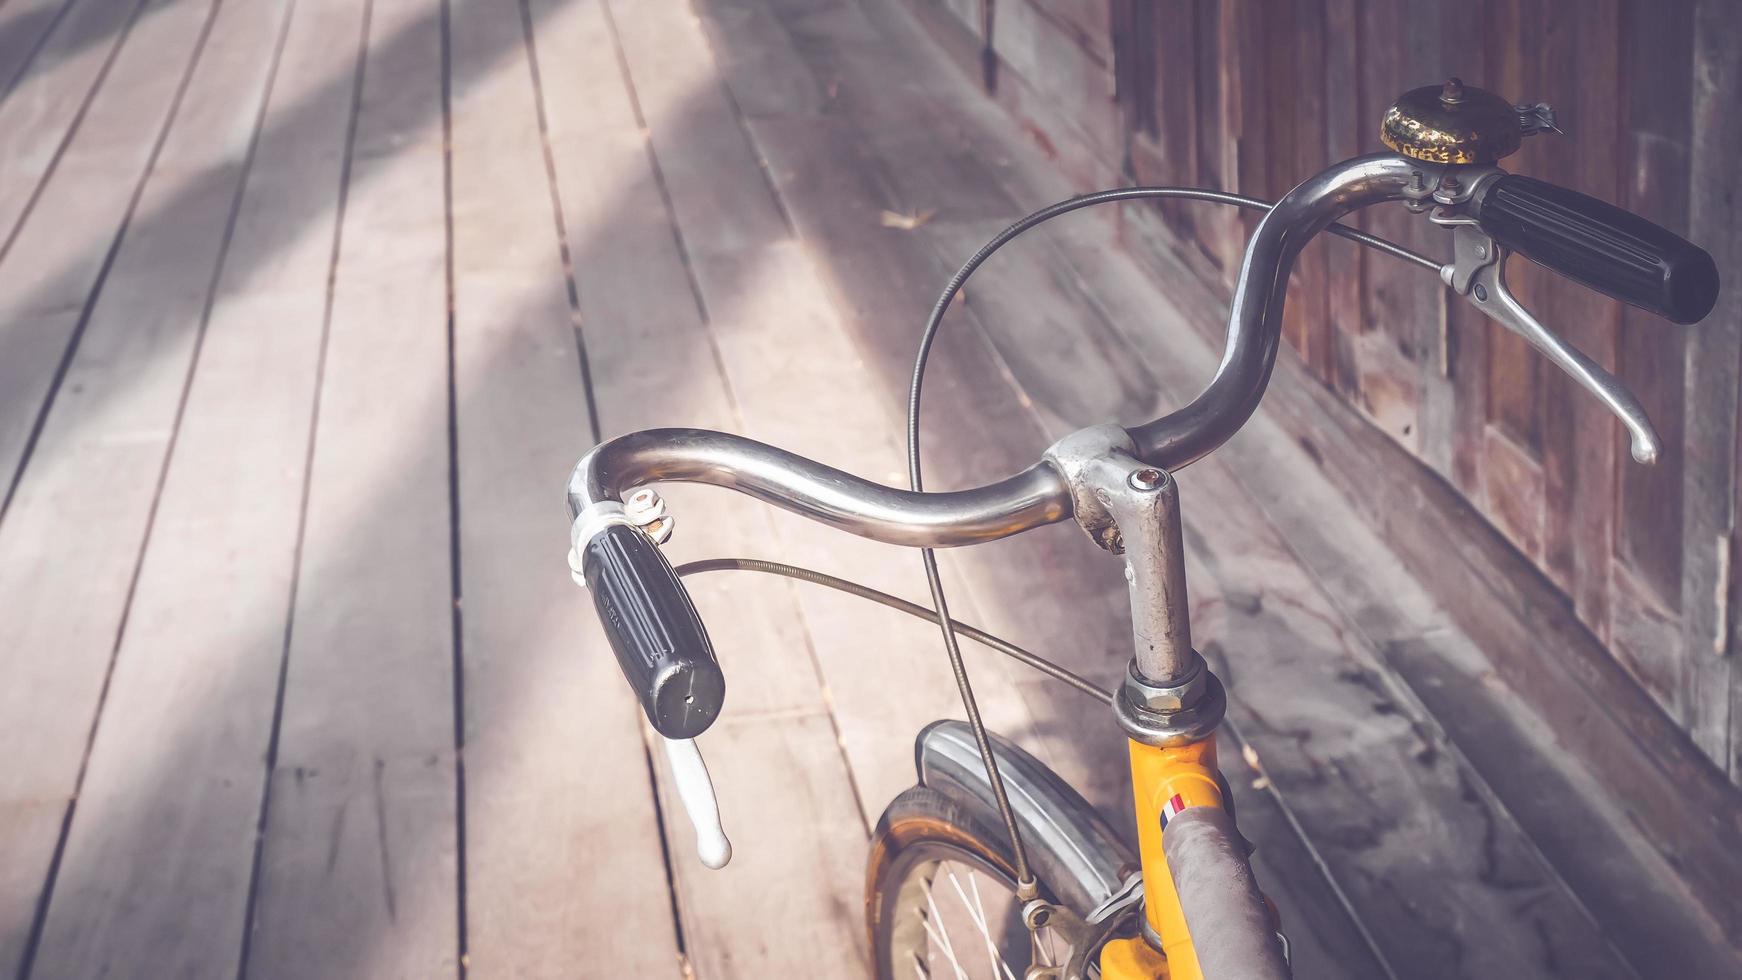 Fahrradlenker hautnah. vintage filter.wooden boden hintergrund.good old day concept.holiday idee. foto